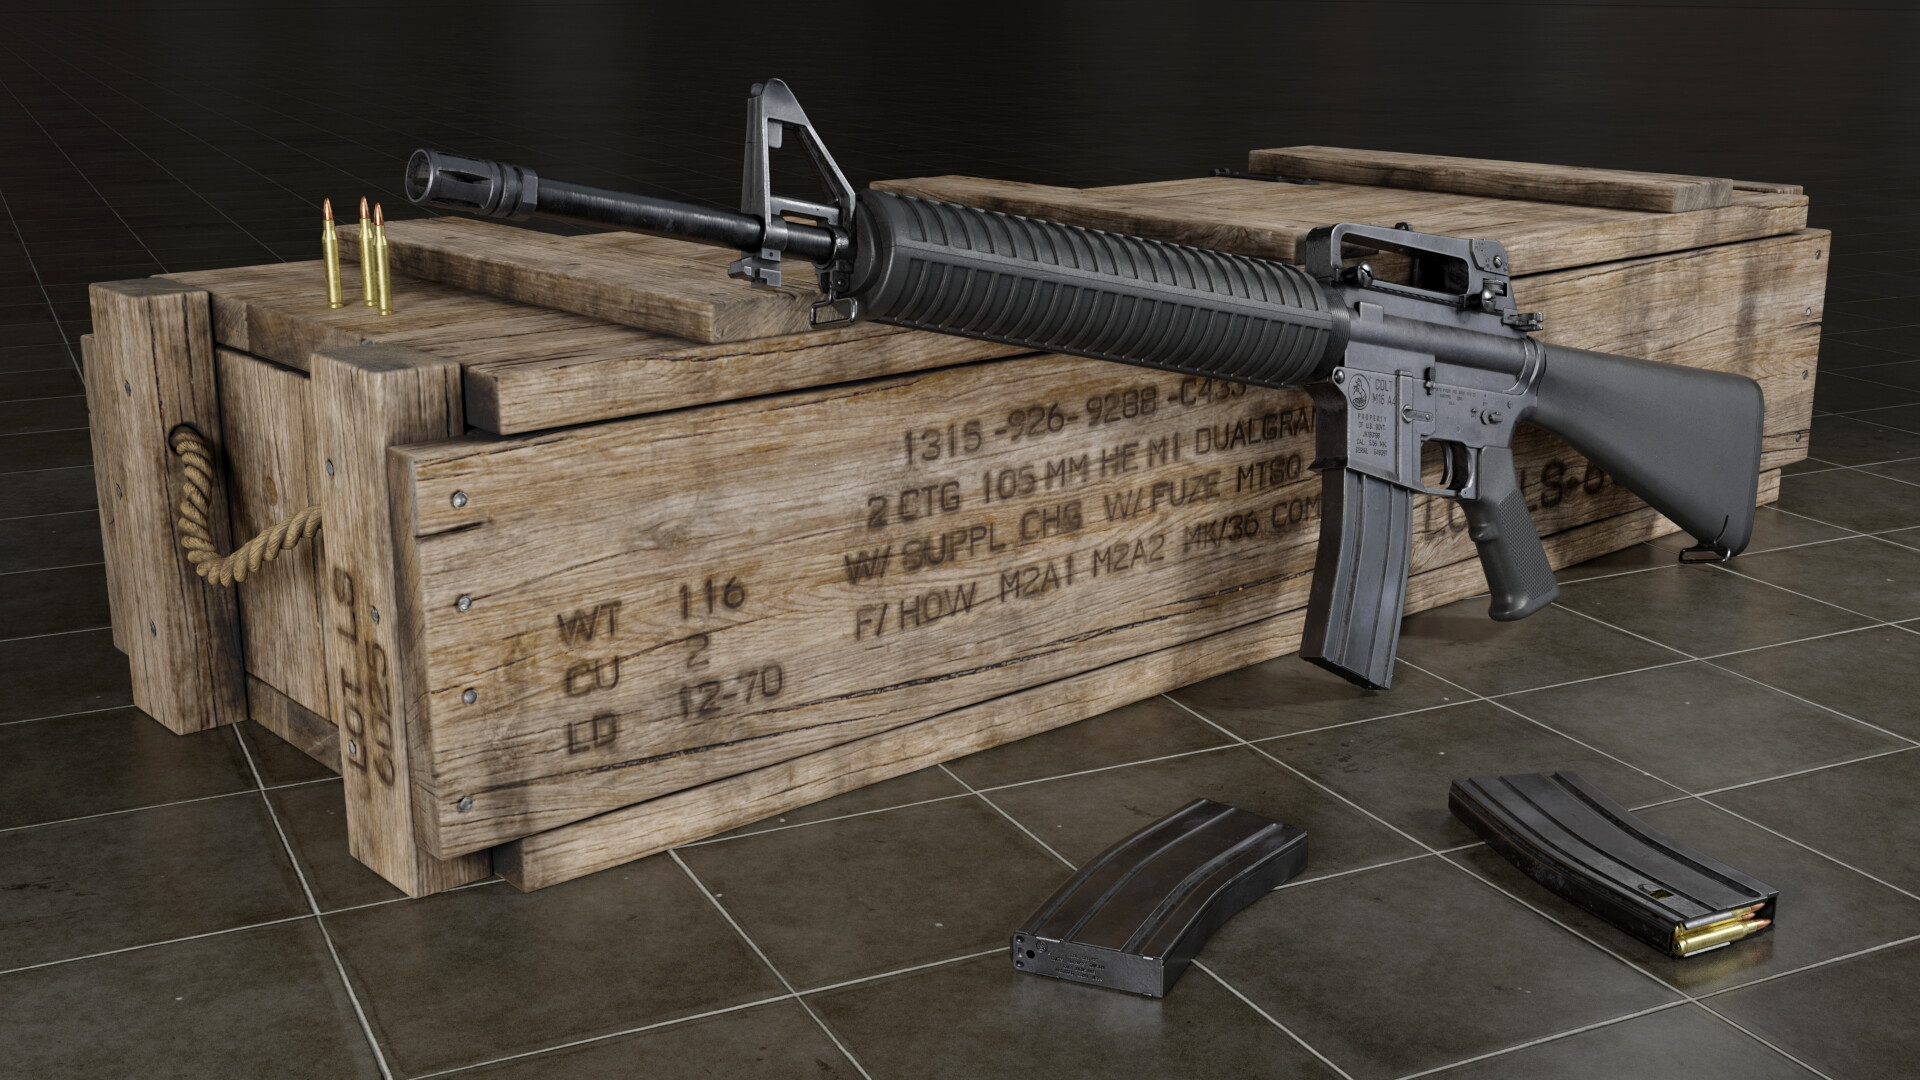 Tales of the Gun : M16 Rifle Weapon Best Military Assault Firearm